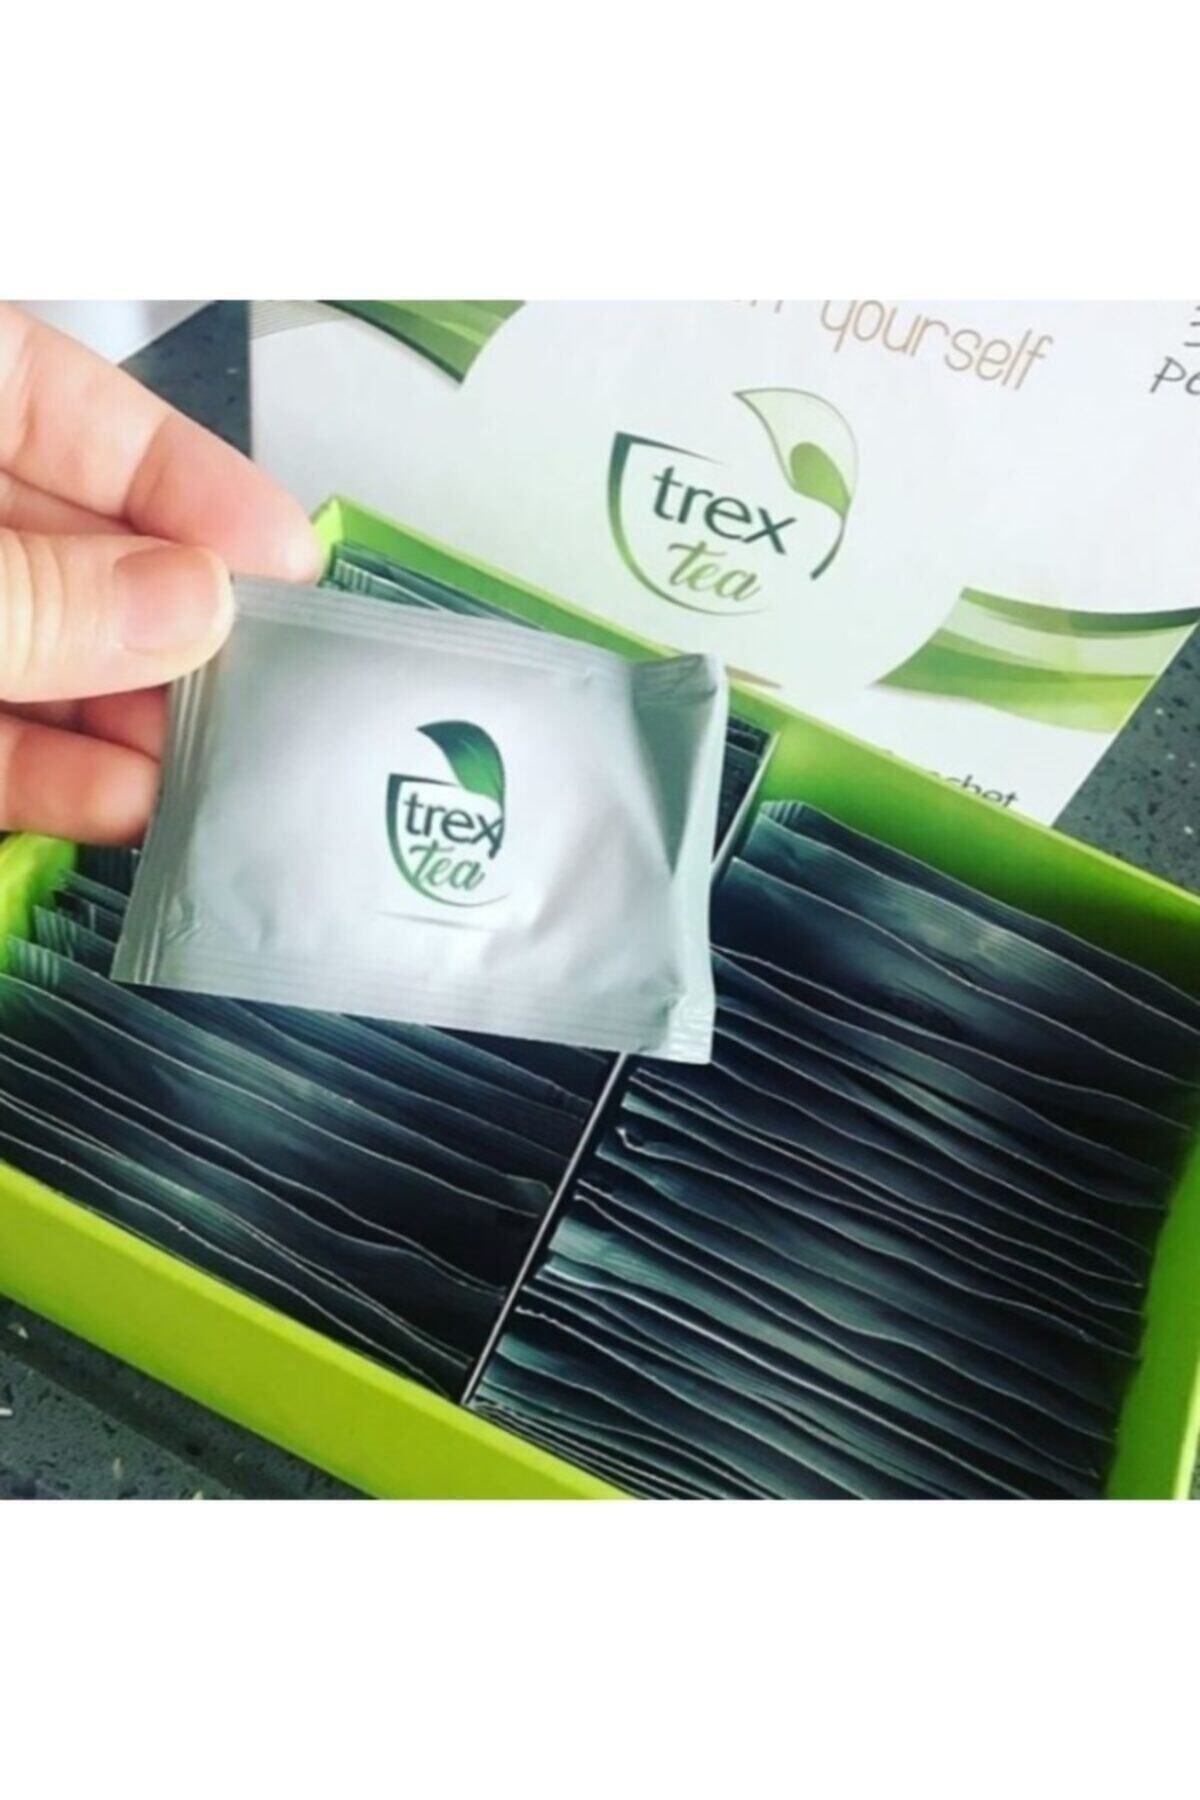 Trex Tea Karışık Bitkisel Çay Tt0105_3